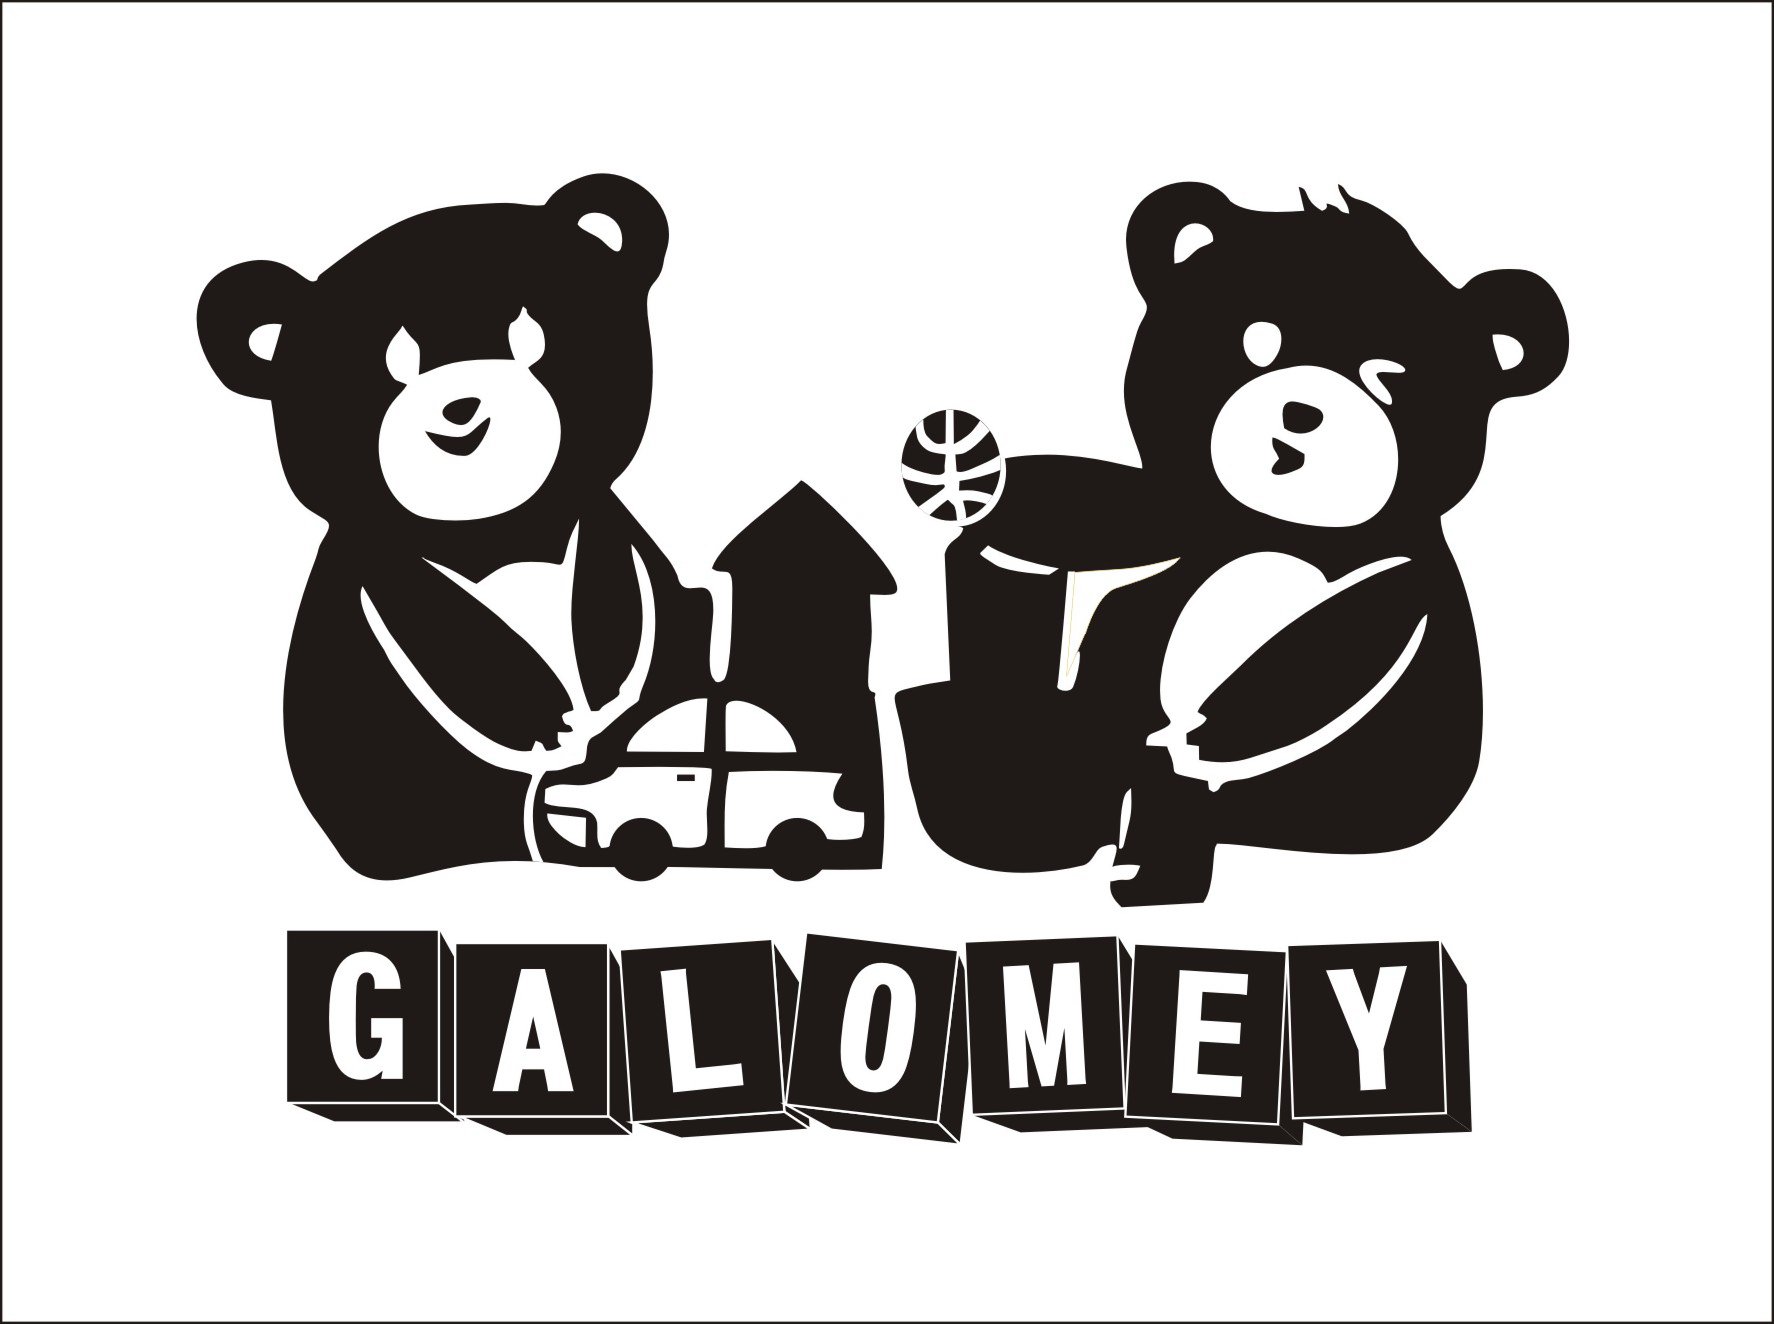  GALOMEY